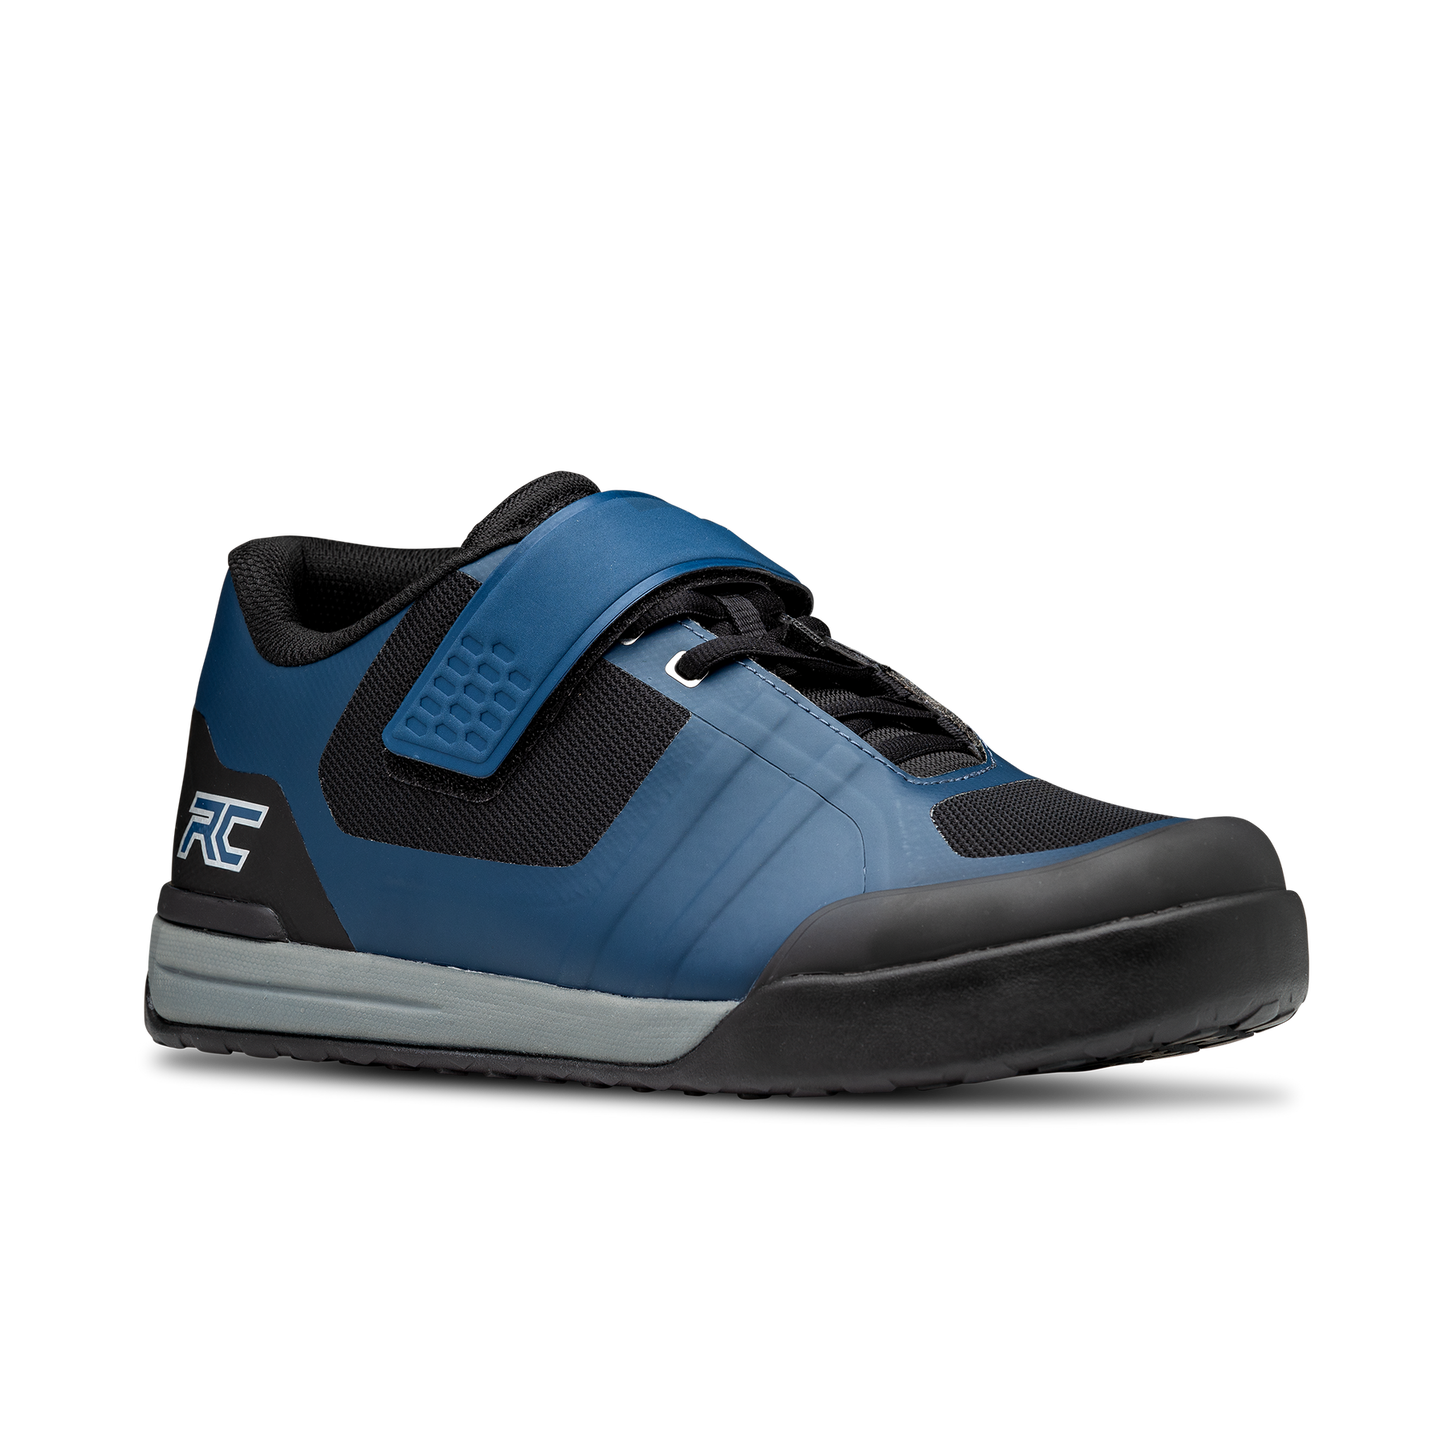 Ride Concepts Transition Spd Shoes - US 9.0 - Marine Blue - Image 1